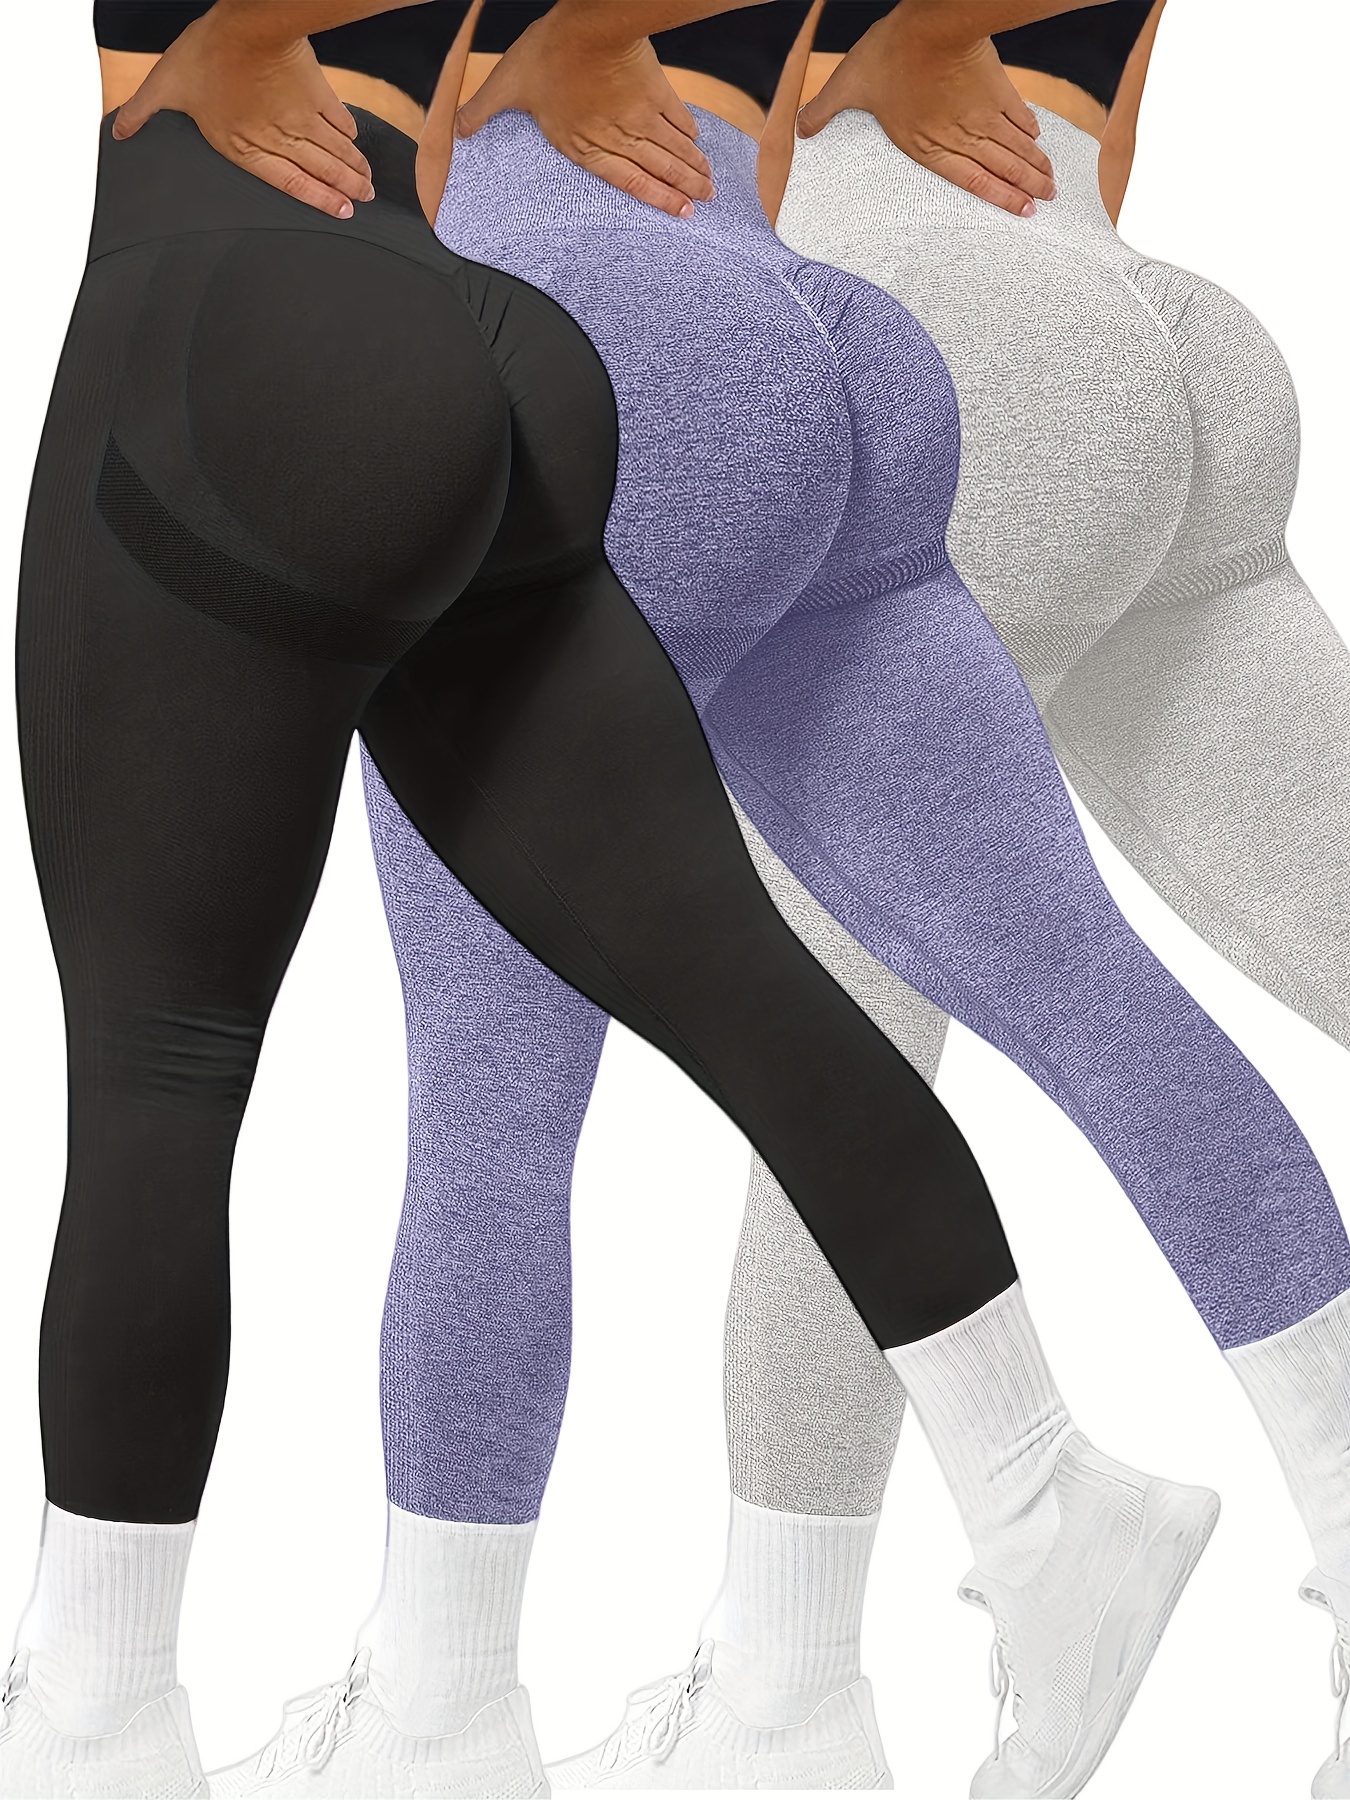 Leggings Push Up Mujeres Cintura Alta Medias Deportivas Yoga Pantalones  Gimnasio Ejercicio Fitness Legging Para Correr Mujer Deportivos Ajustados